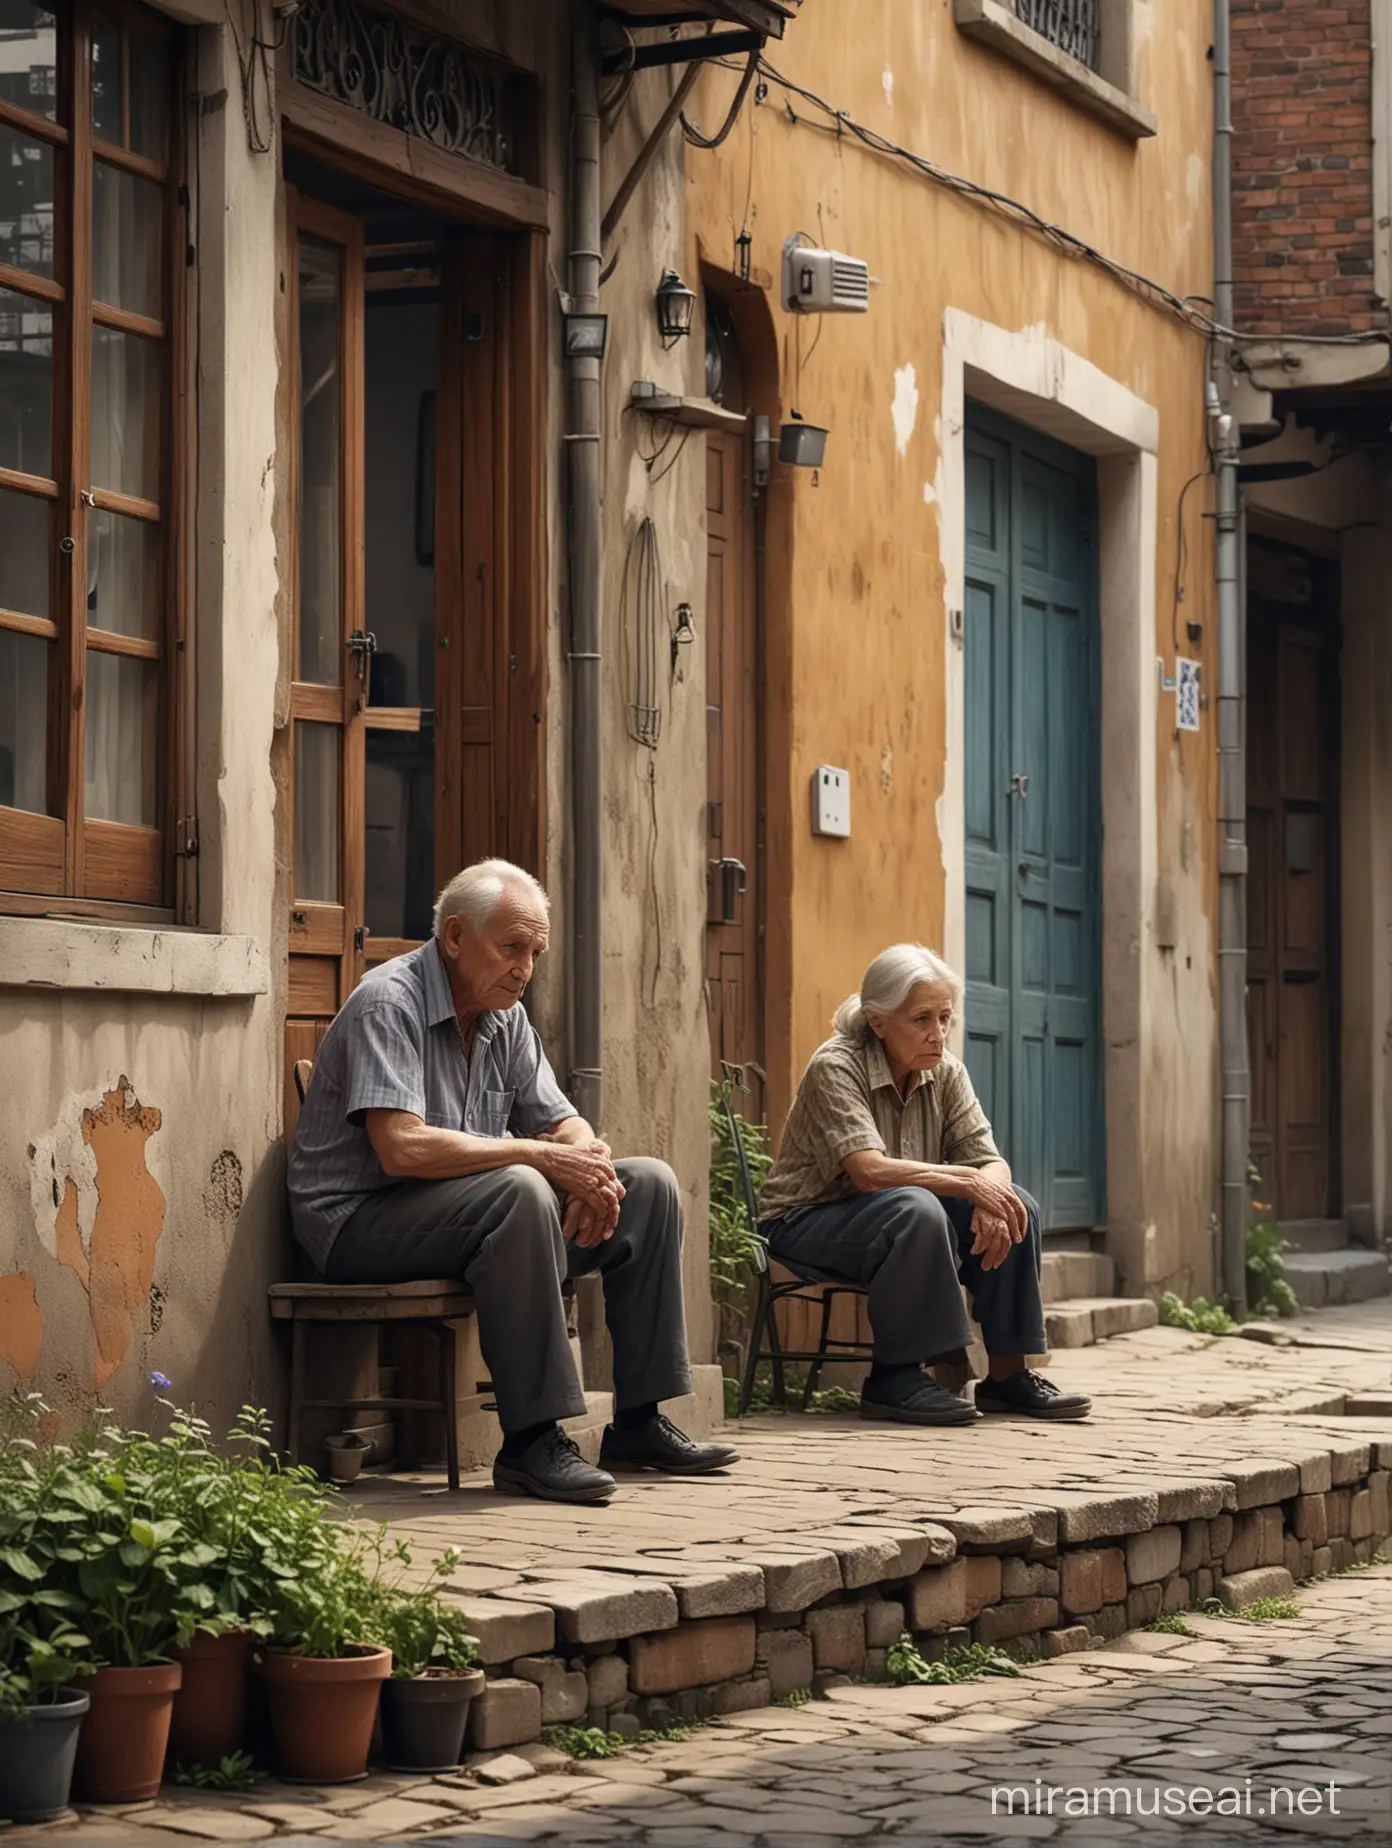 Elderly Couple Reflecting on Terrace of Quaint Village Home